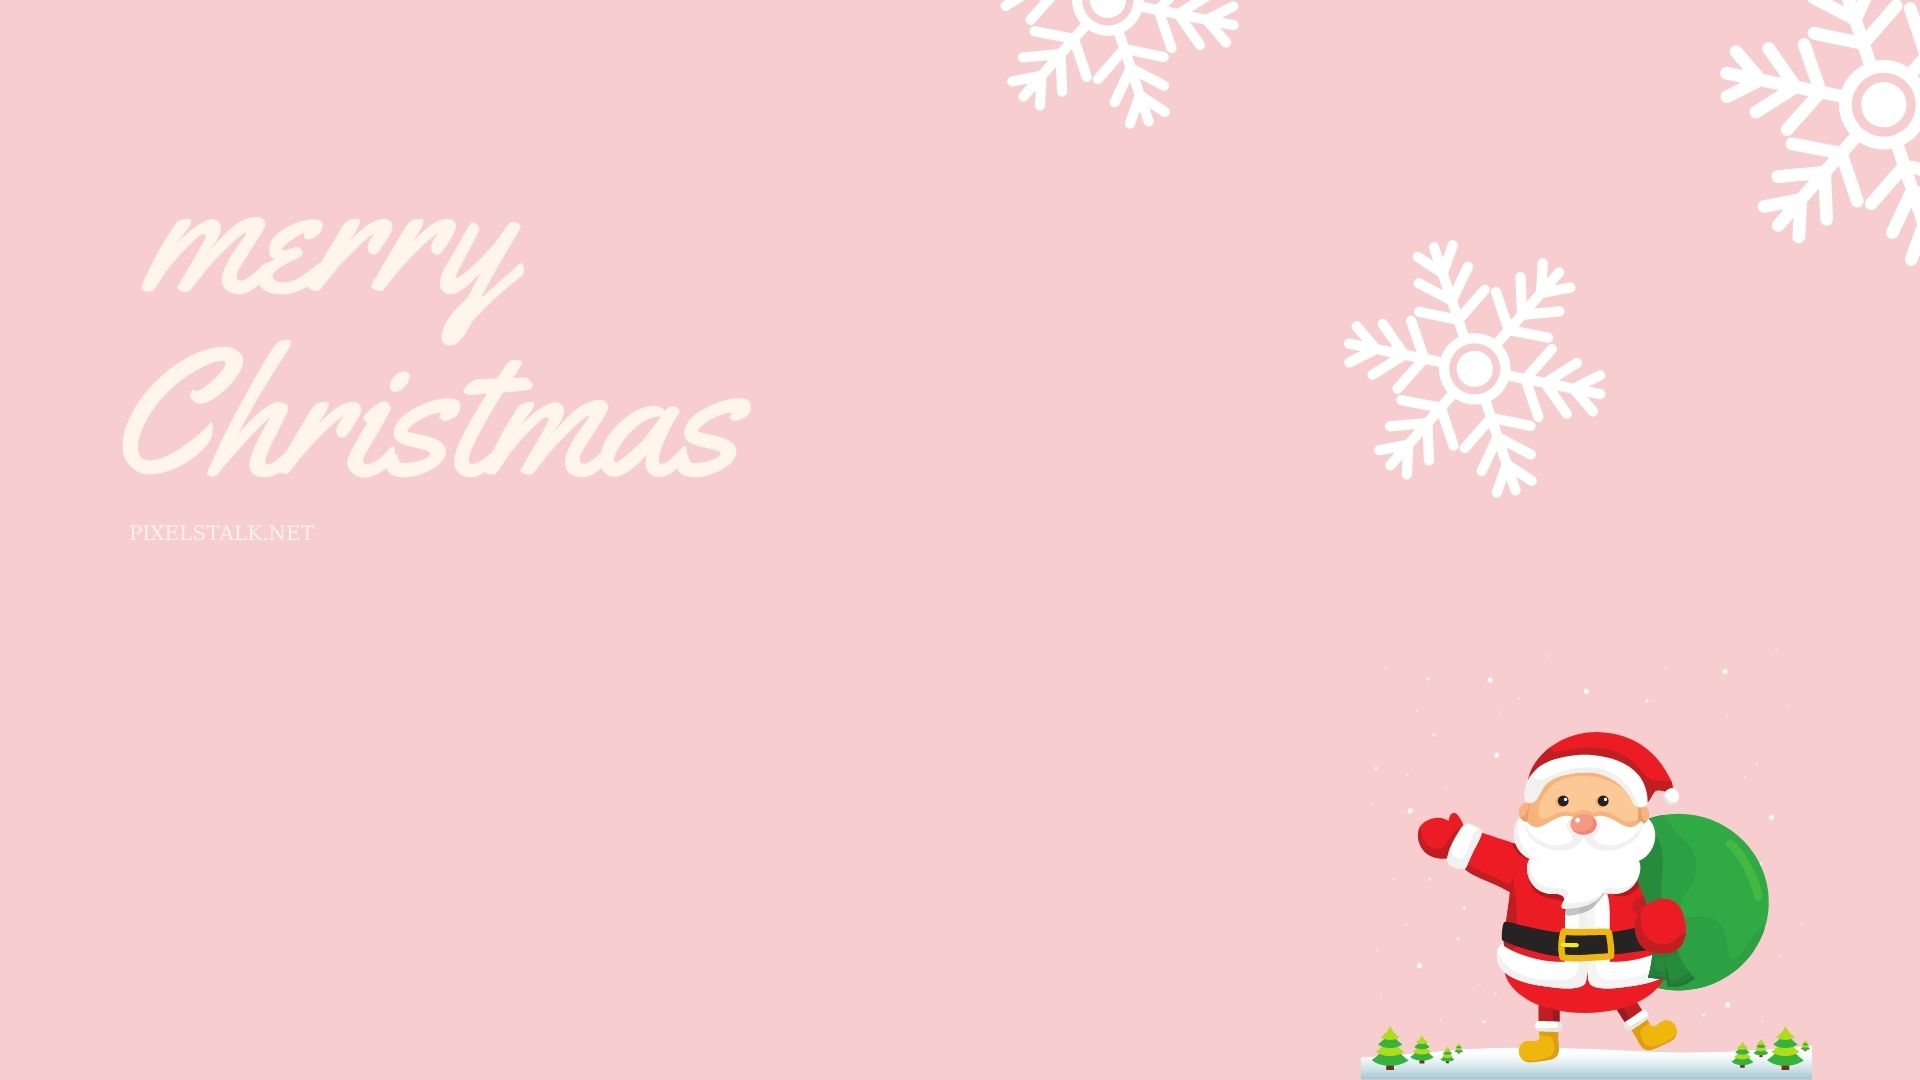 Top Pink Christmas Background Stock Vectors Illustrations  Clip Art   iStock